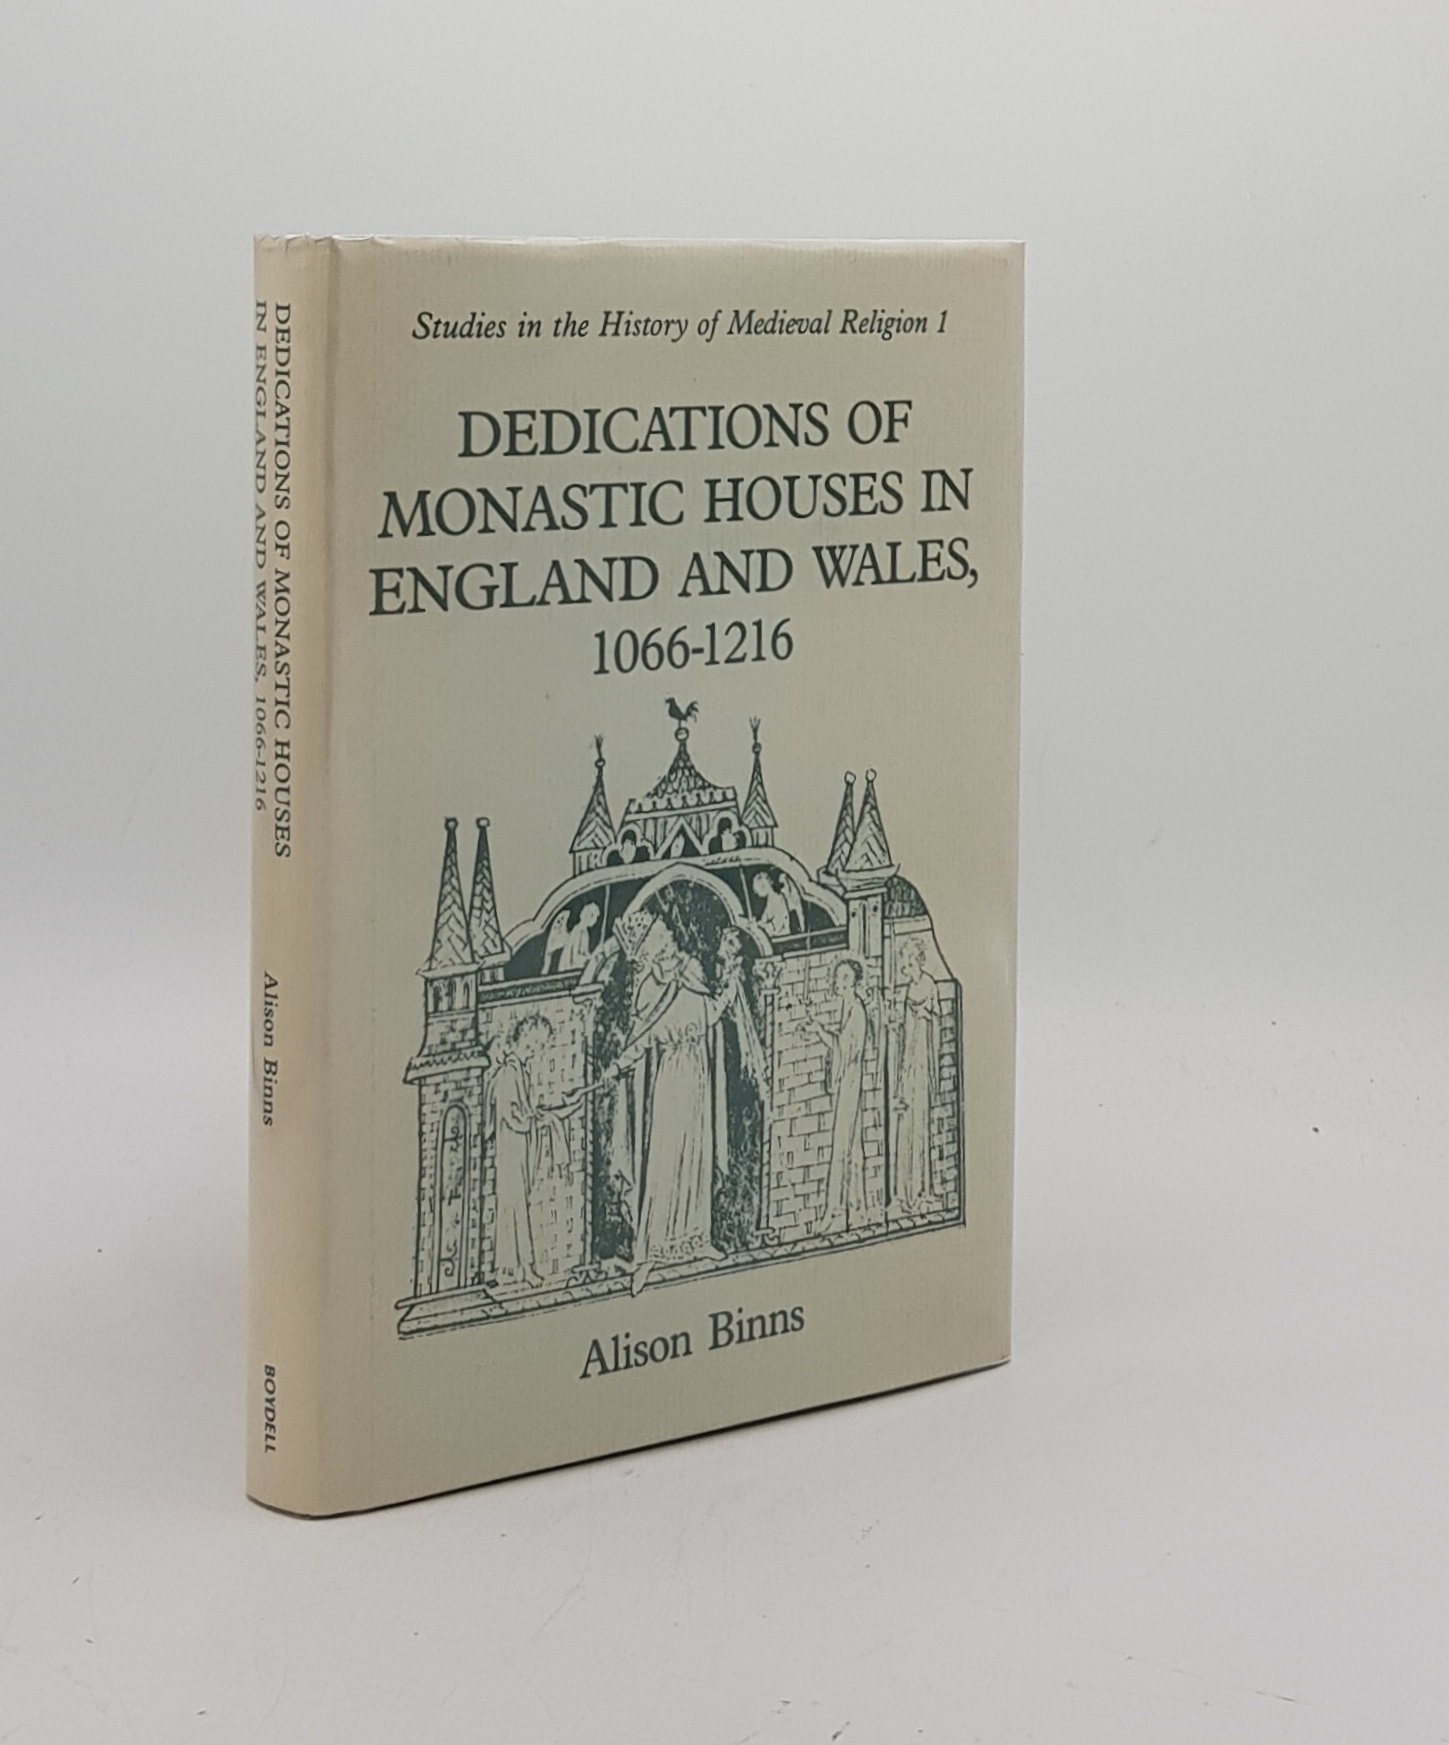 DEDICATIONS OF MONASTIC HOUSES IN ENGLAND AND WALES 1066-1216 (Studies in the History of Medieval Religion Volume 1) - BINNS Alison